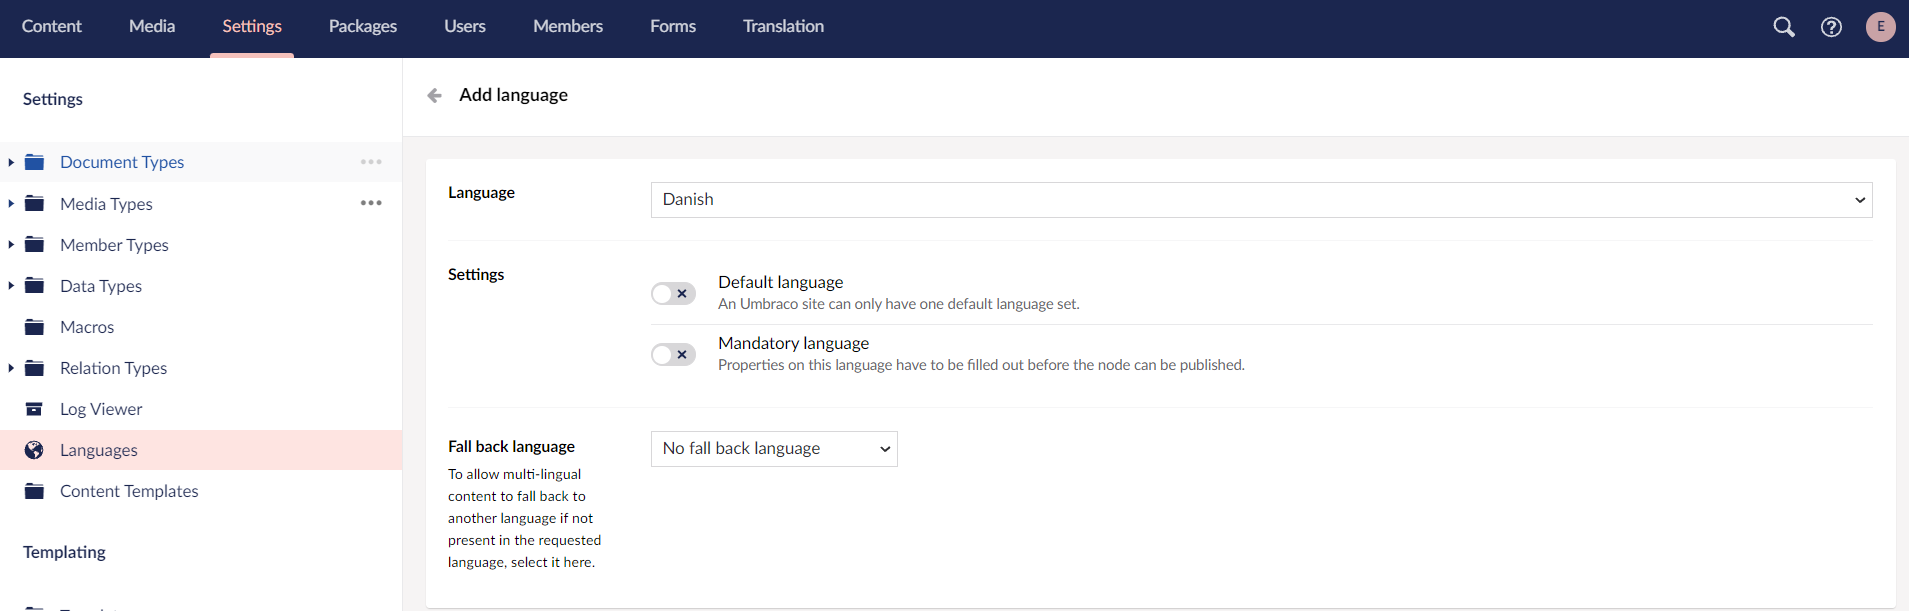 Adding the Danish language